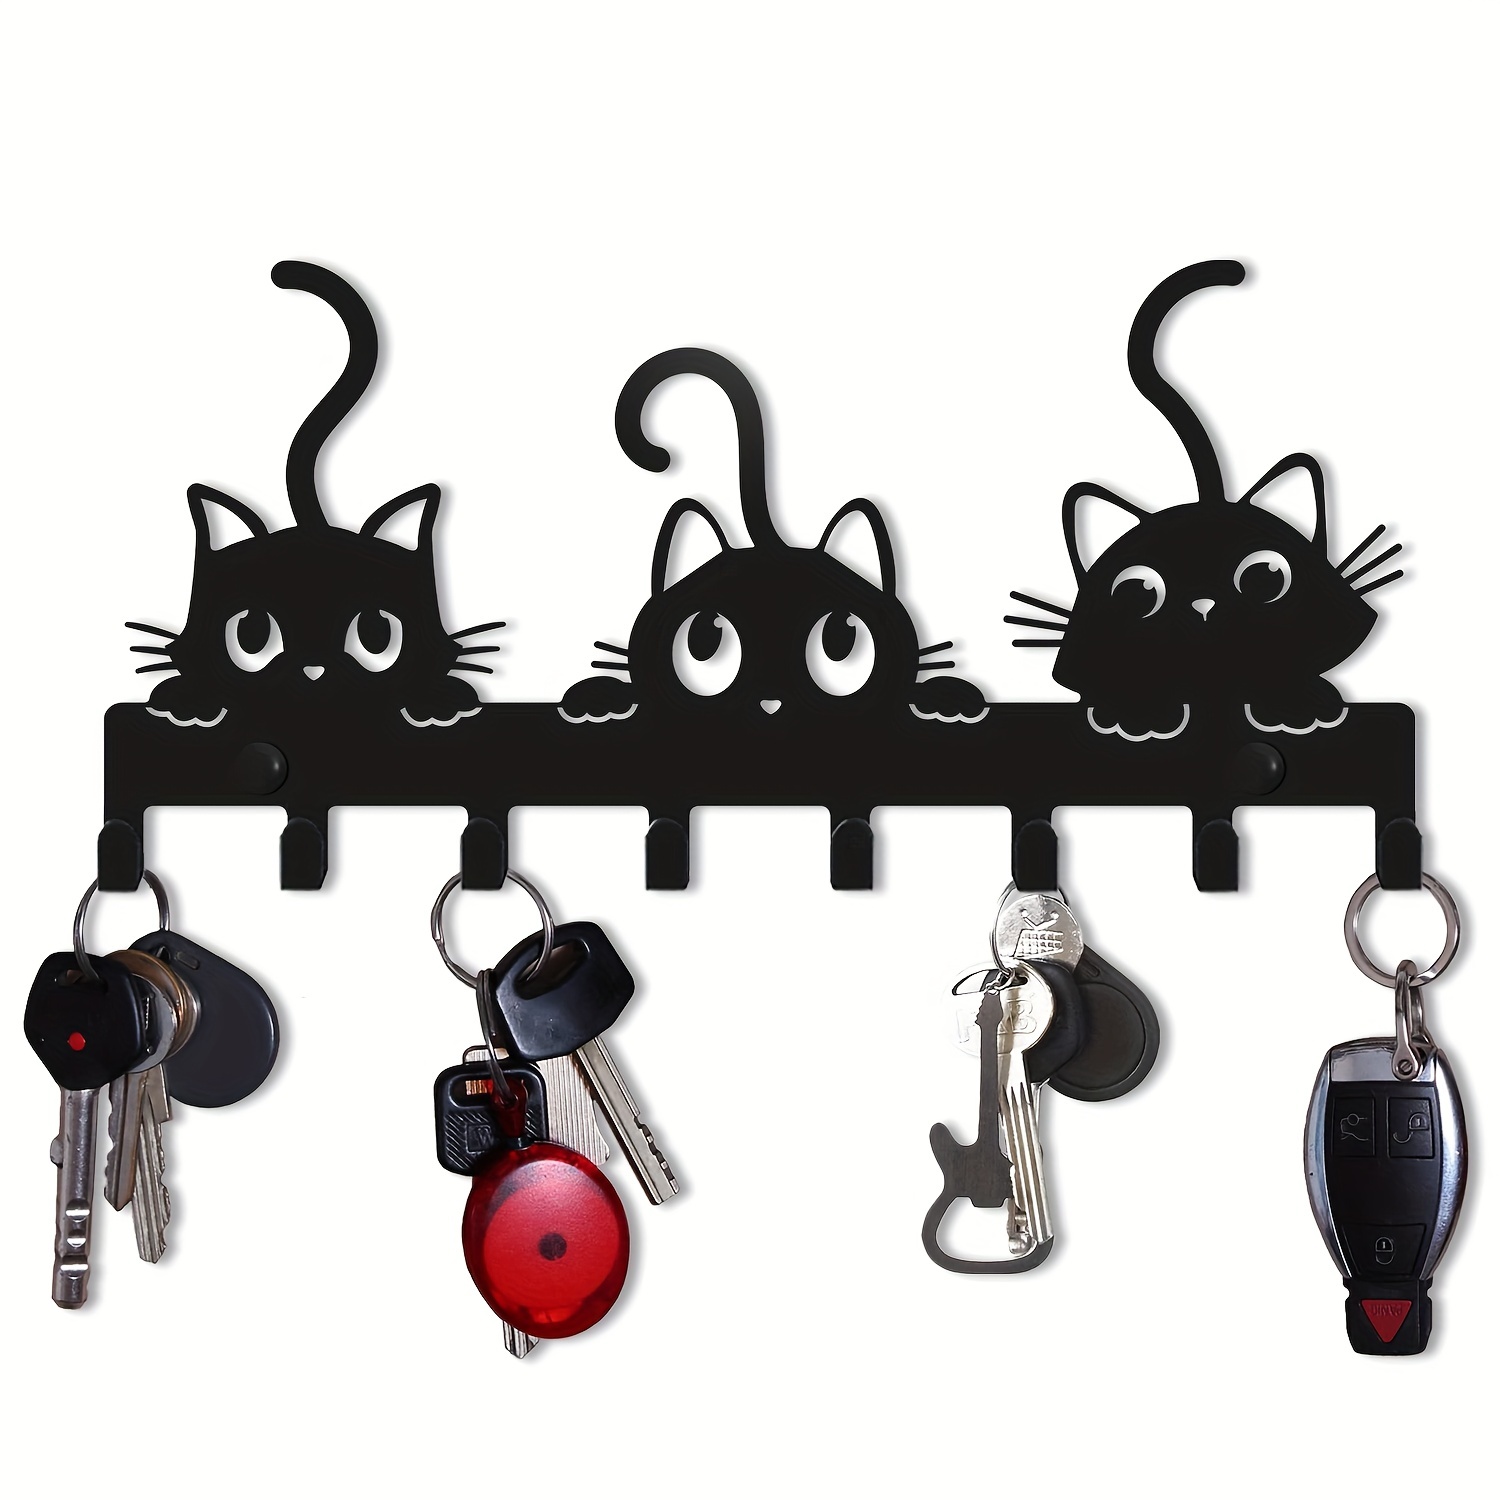 FRCOLOR 4Pcs Cartoon Wall Coat Hooks Adhesive Animal Hooks Cute Decorative  Wall Hook Key Holder 